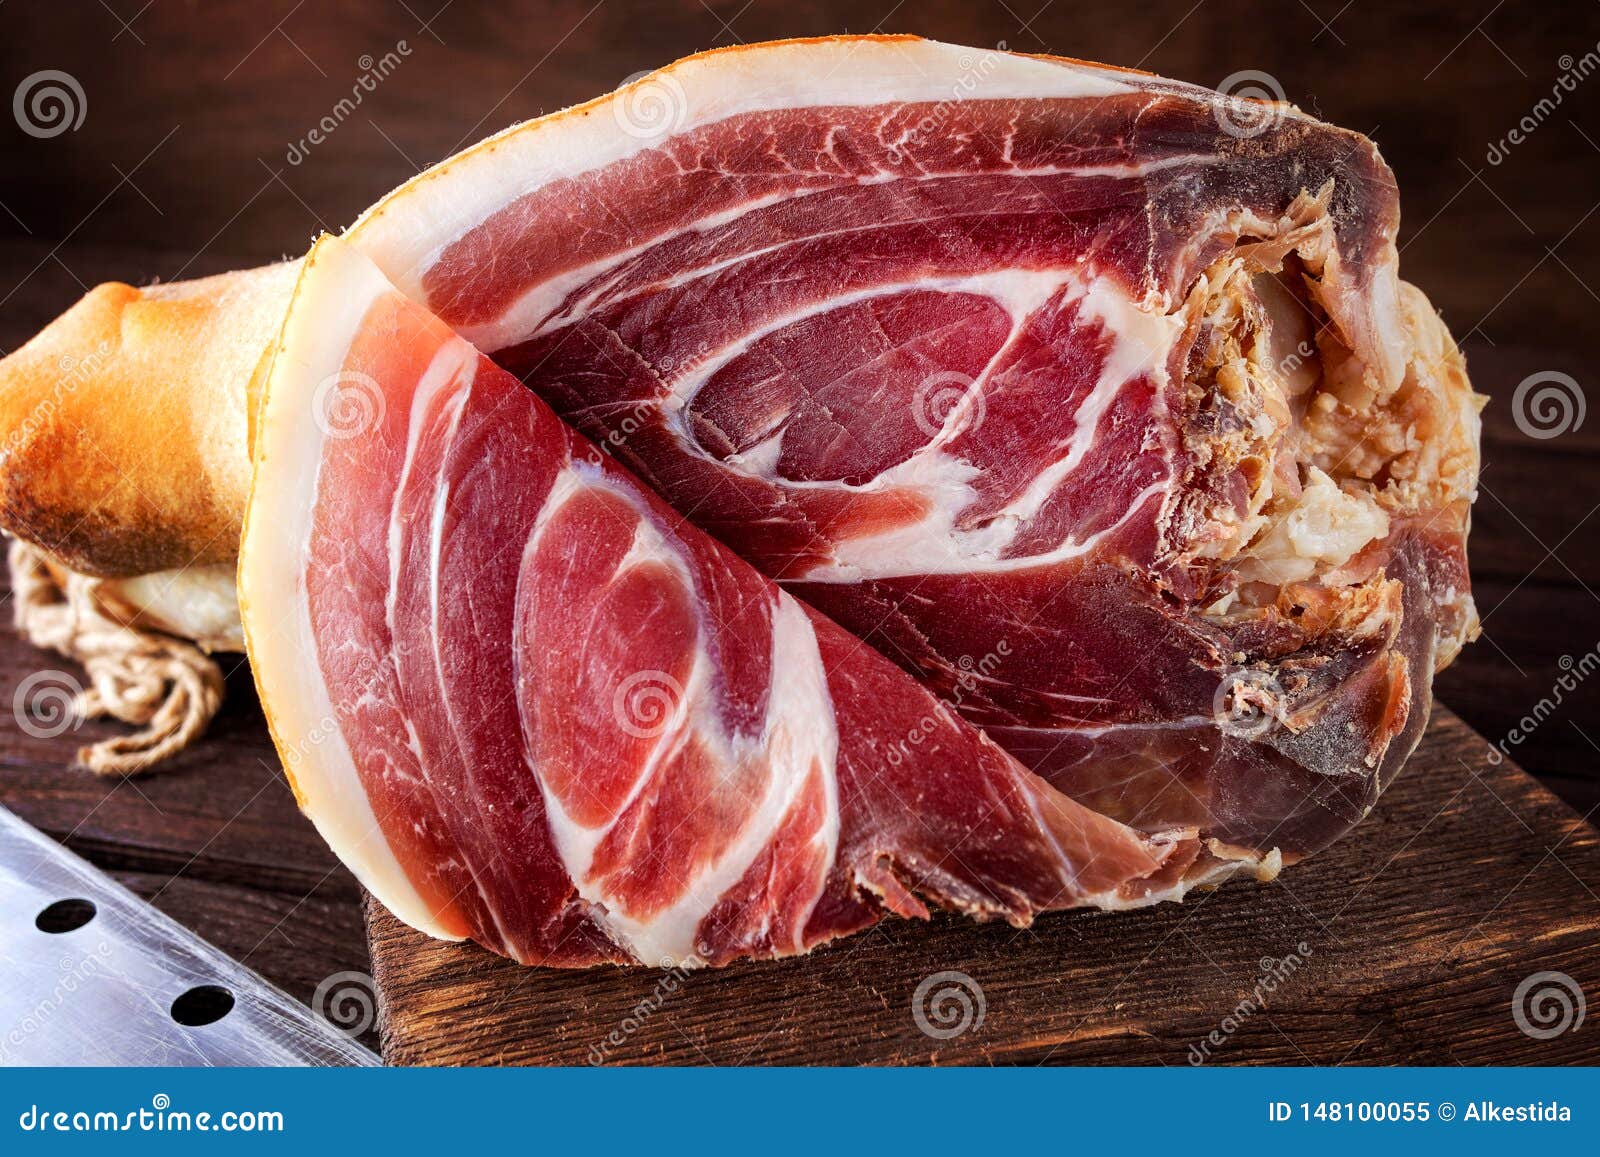 spanish ham, bellota, jamon serrano, crudo, italian prosciutto, whole leg,  parma ham cut with a knife and lying on a wooden board